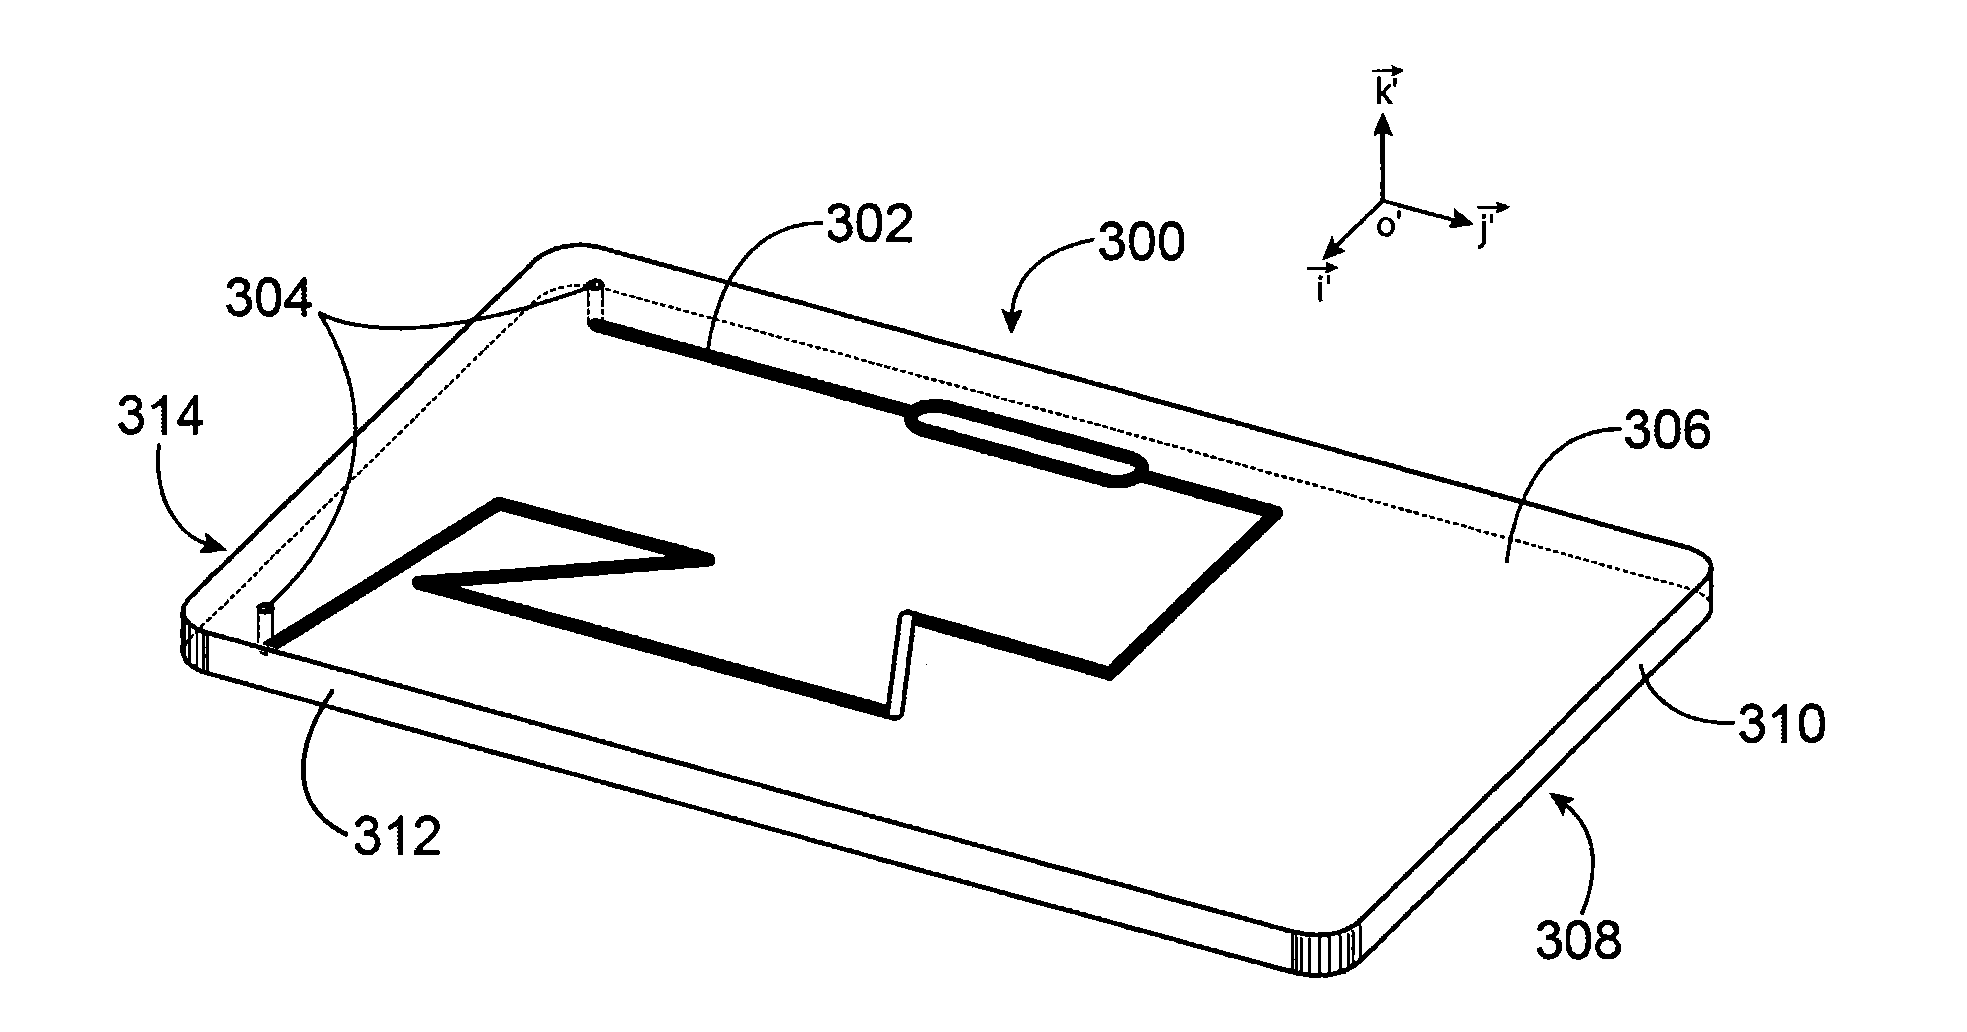 Microfluidic card connection device